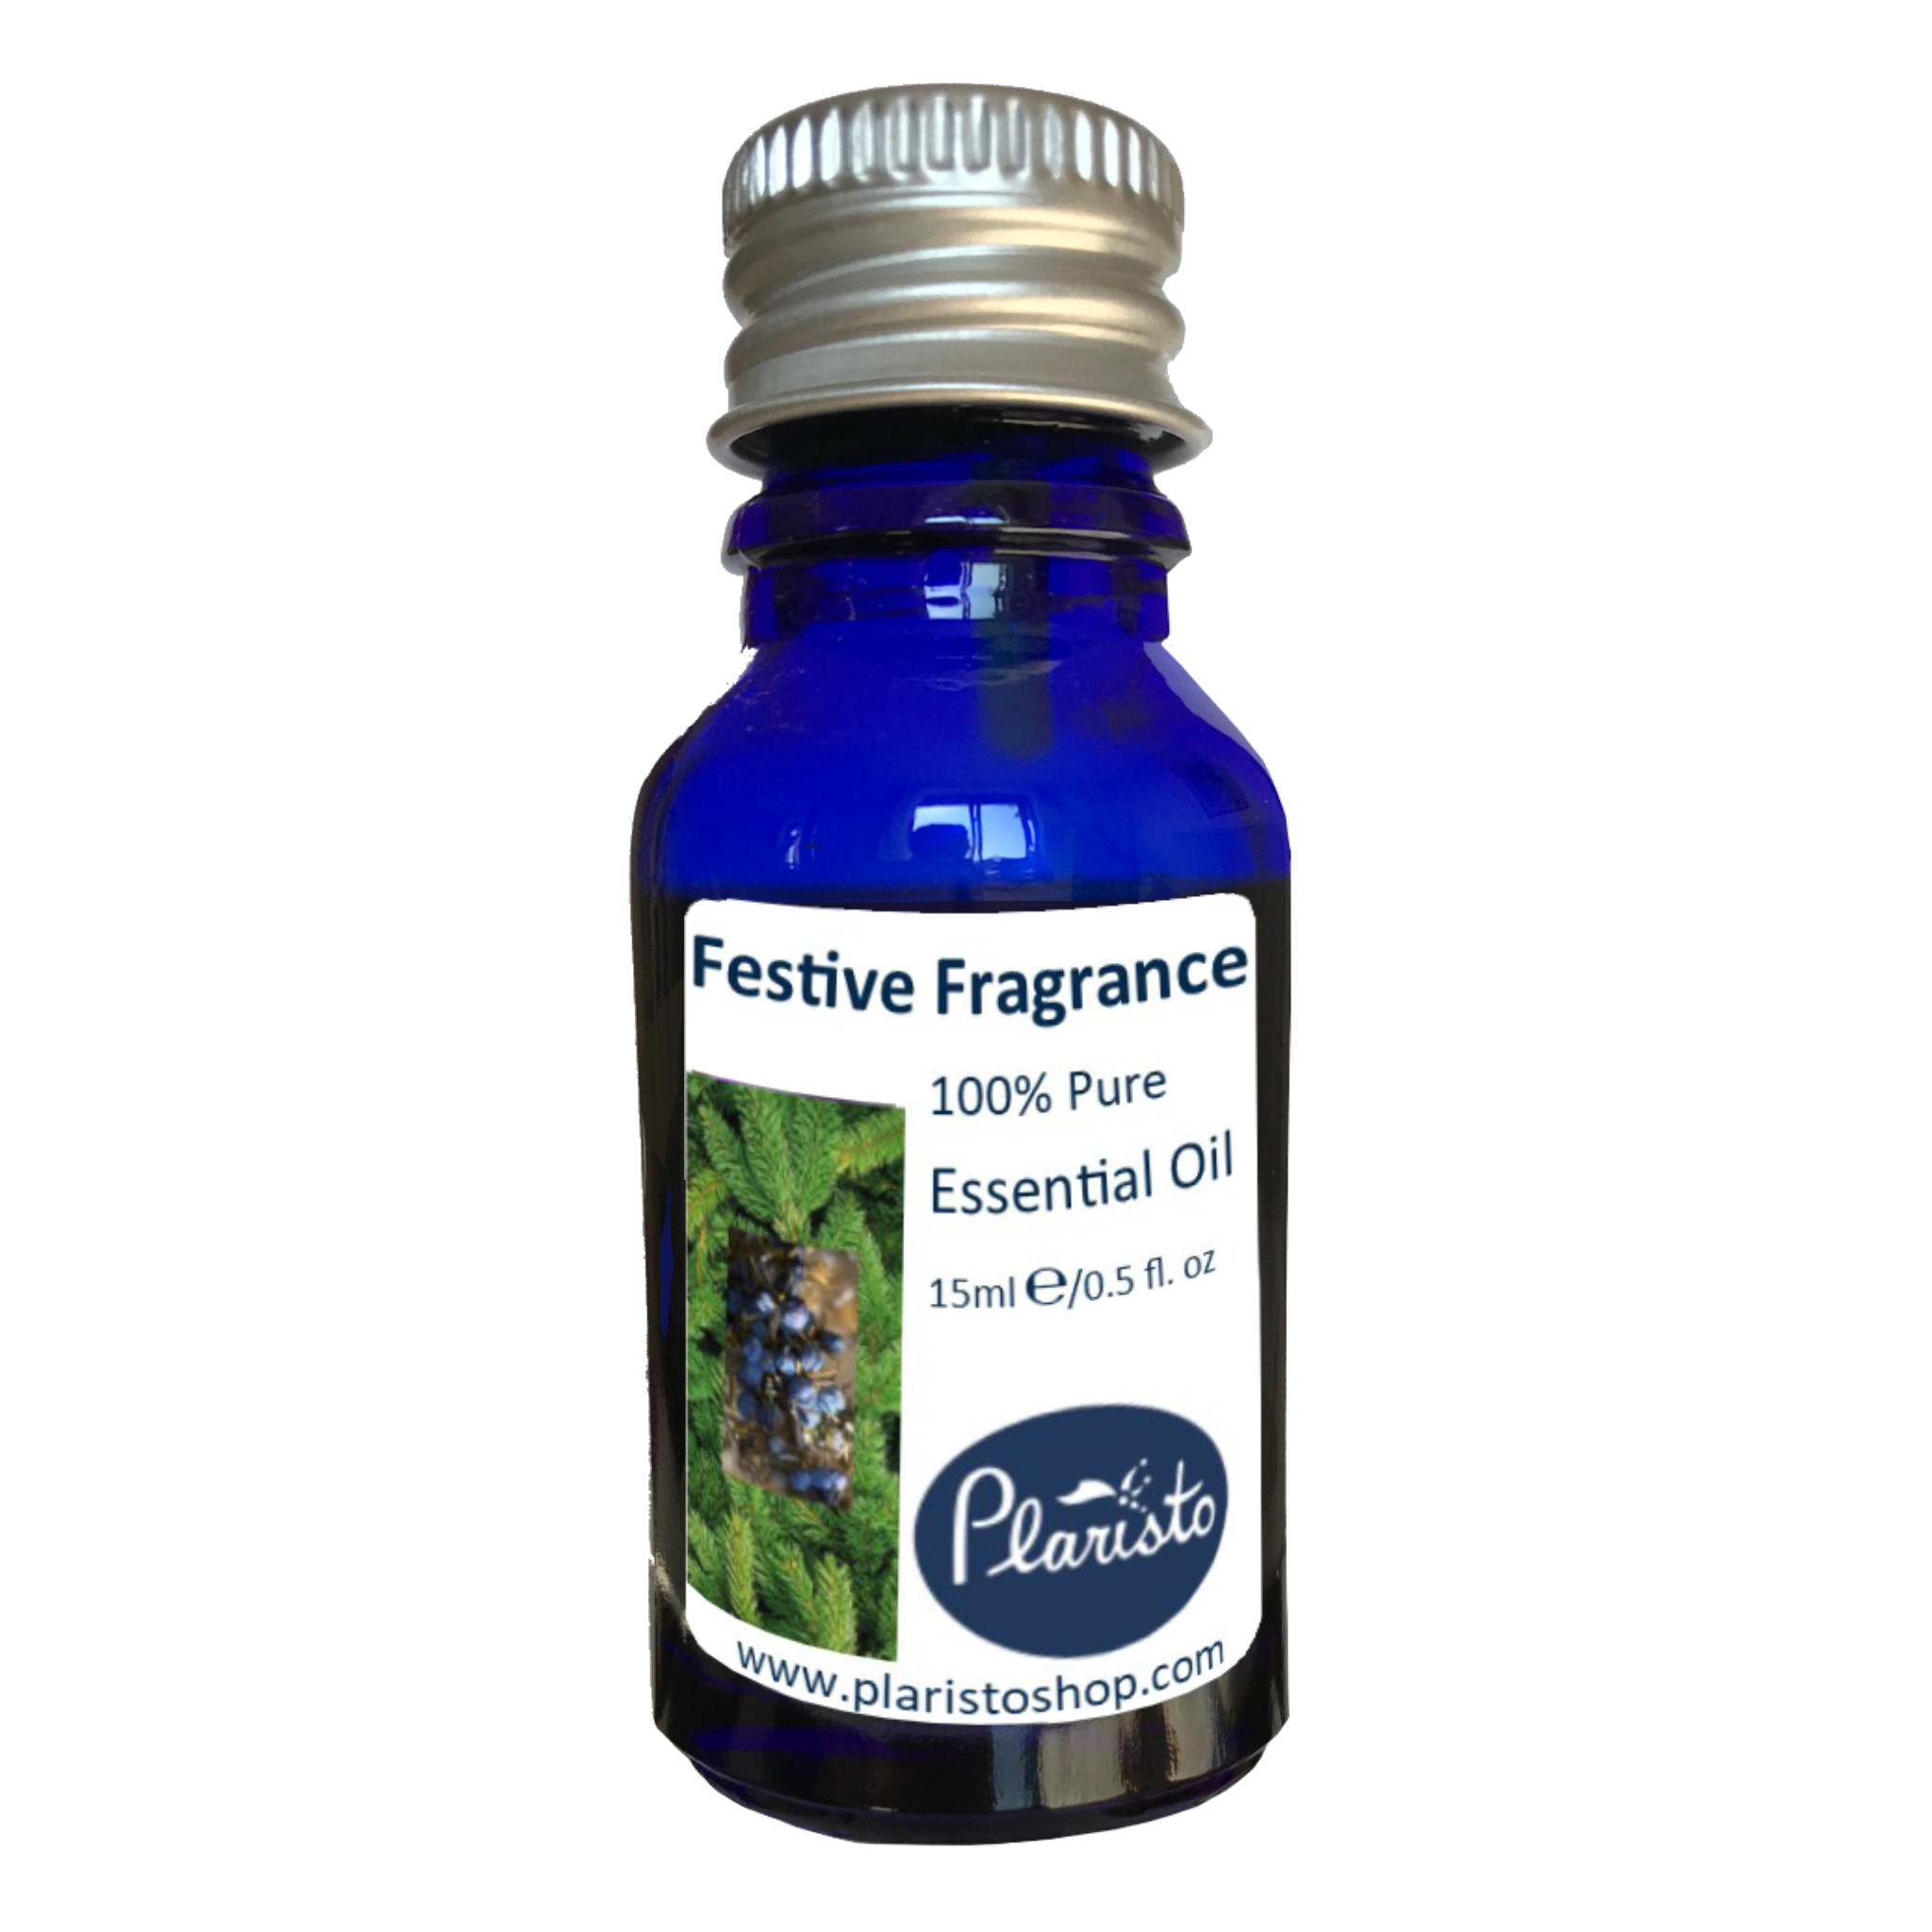 Festive Fragrance Essential Oil 15ml Pack of 6